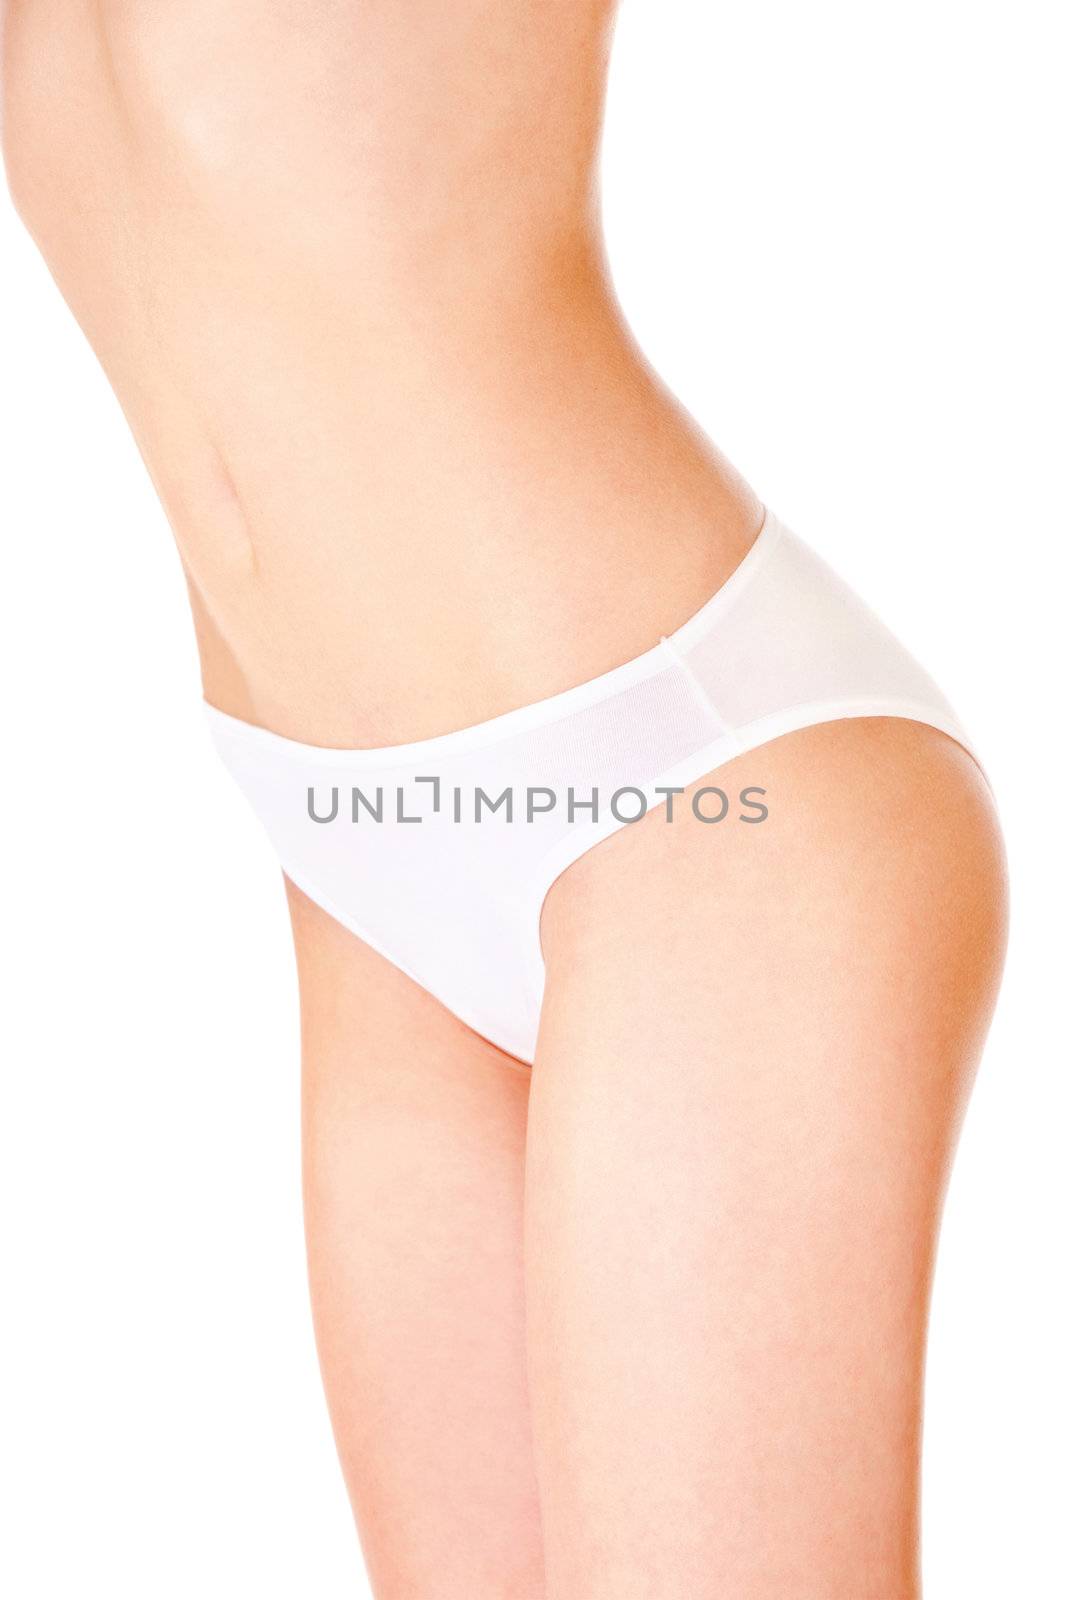 pretty female body in underwear, isolated on white. Health concept 